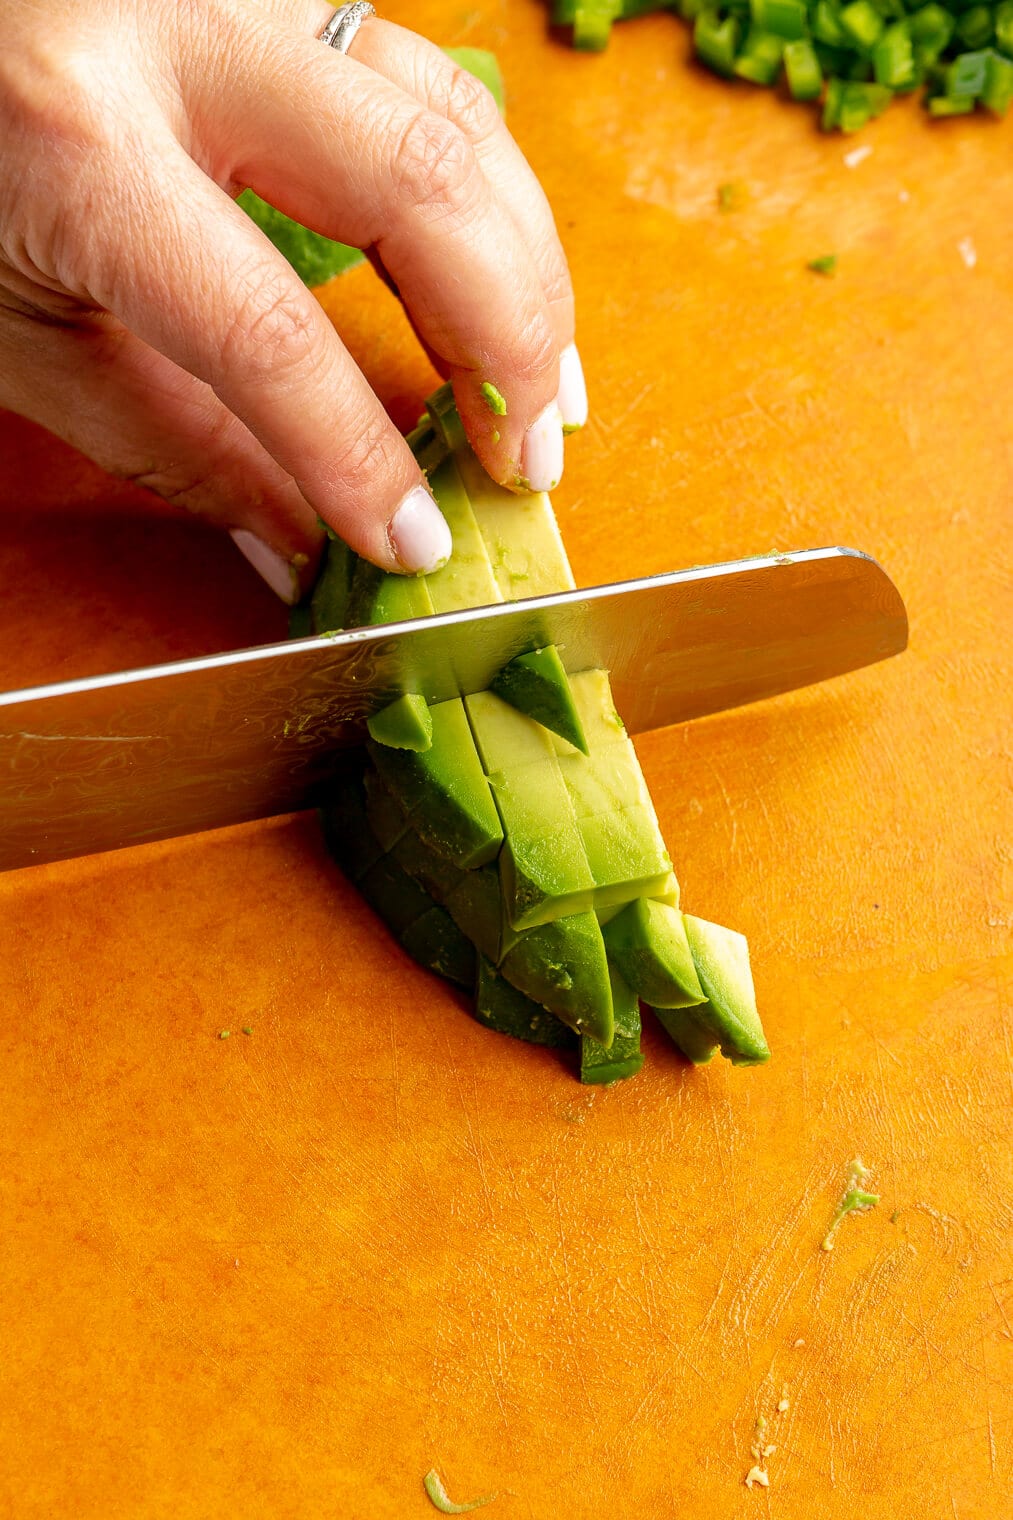 Hand holding a butcher knife dicing avocado.